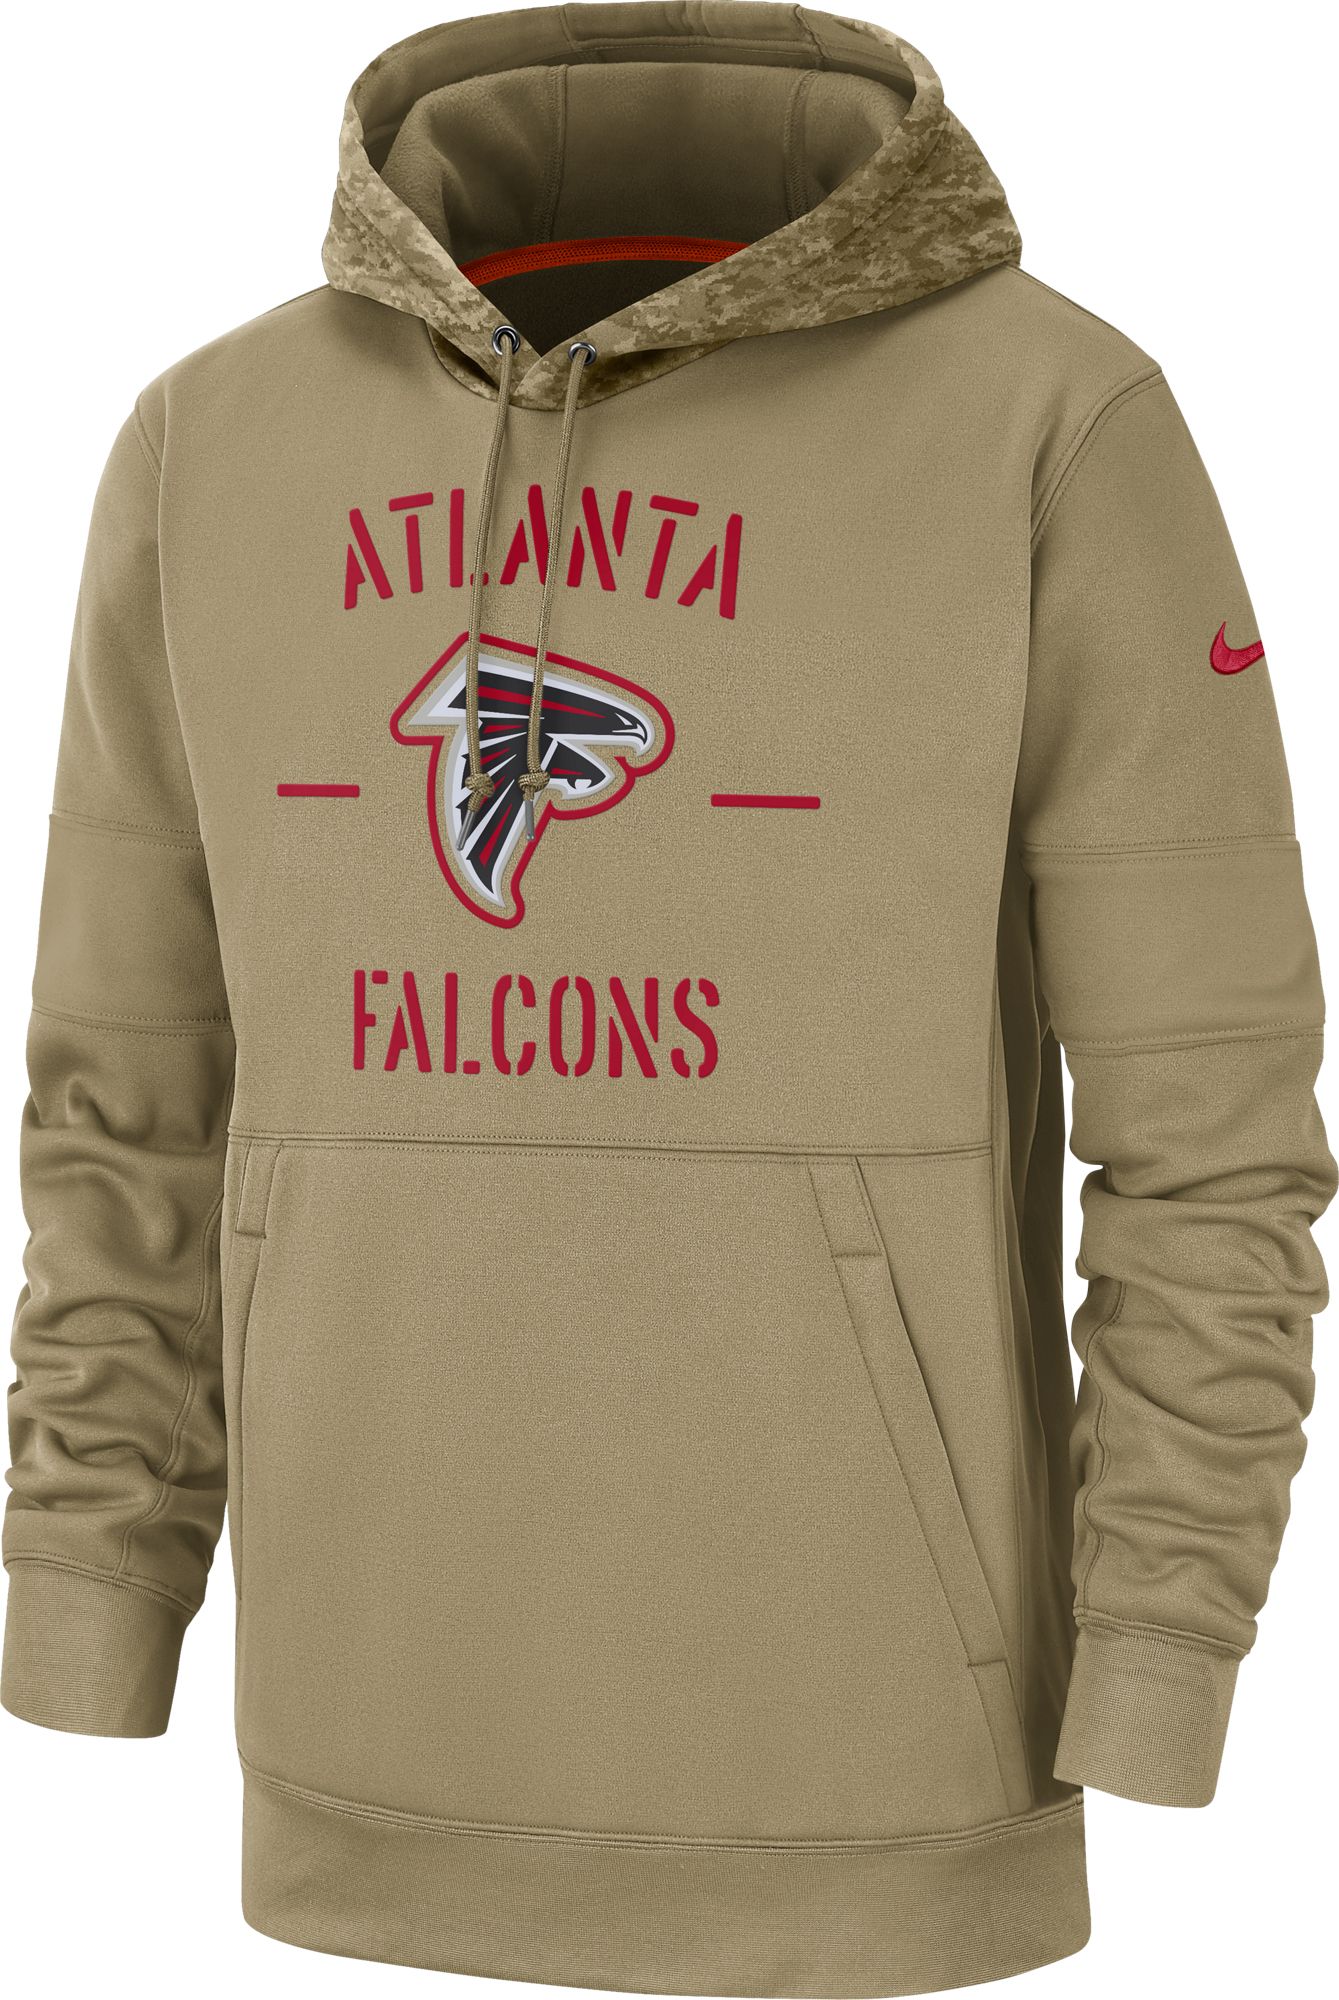 atlanta falcons nike hoodie